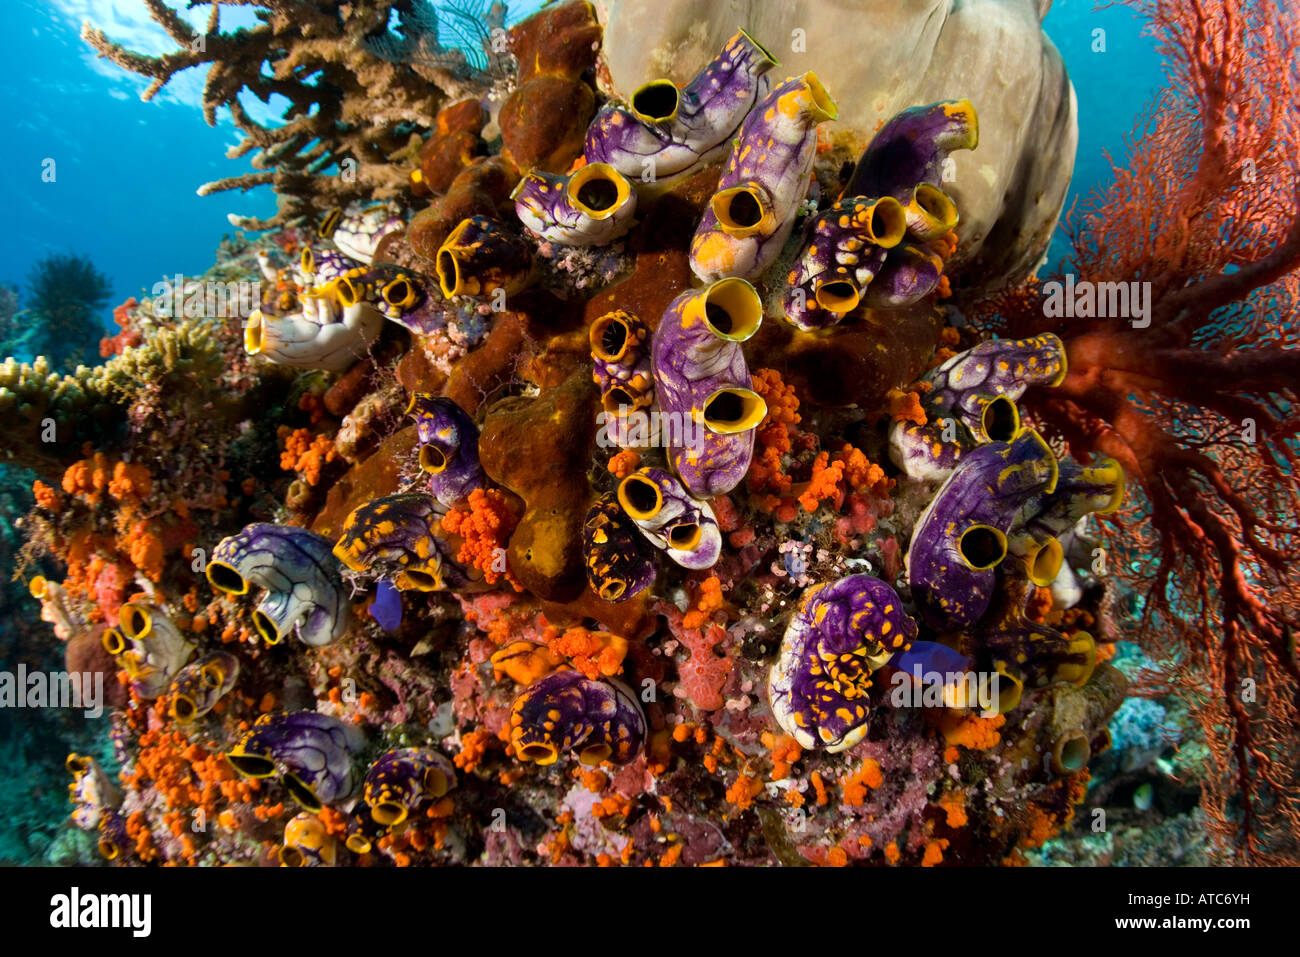 colony of tunicate naturally solitary Polycarpa aurata Raja Ampat Irian Jaya West Papua Pacific Ocean Indonesia Stock Photo